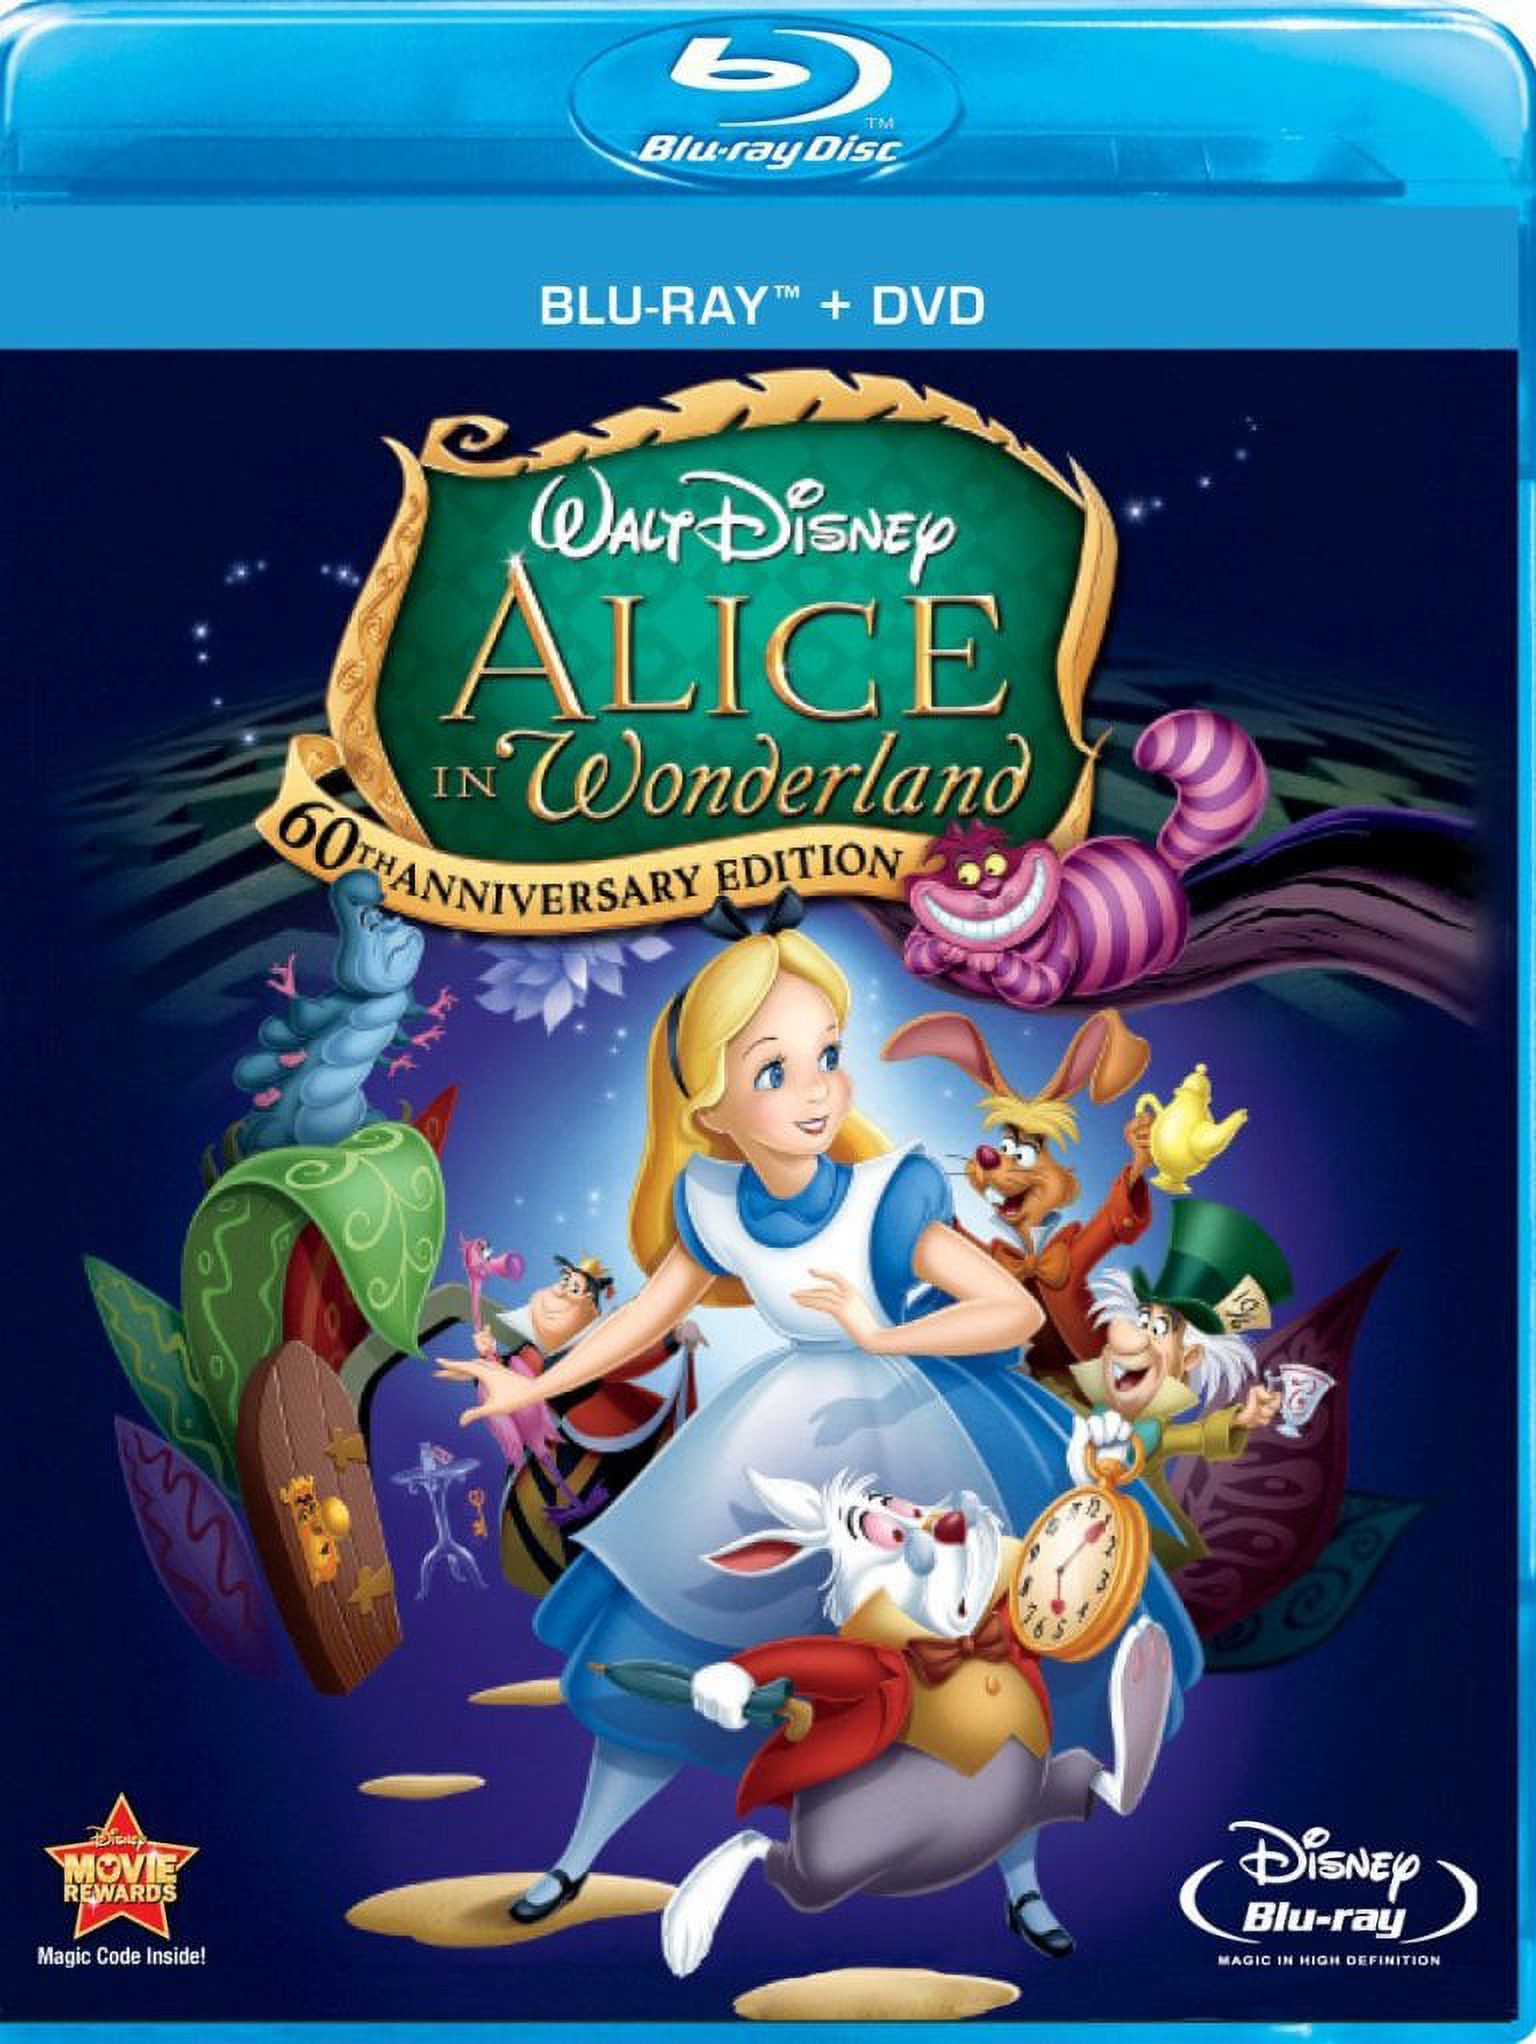 Alice in Wonderland (Blu-ray) 60th Anniversary Edition - image 3 of 5